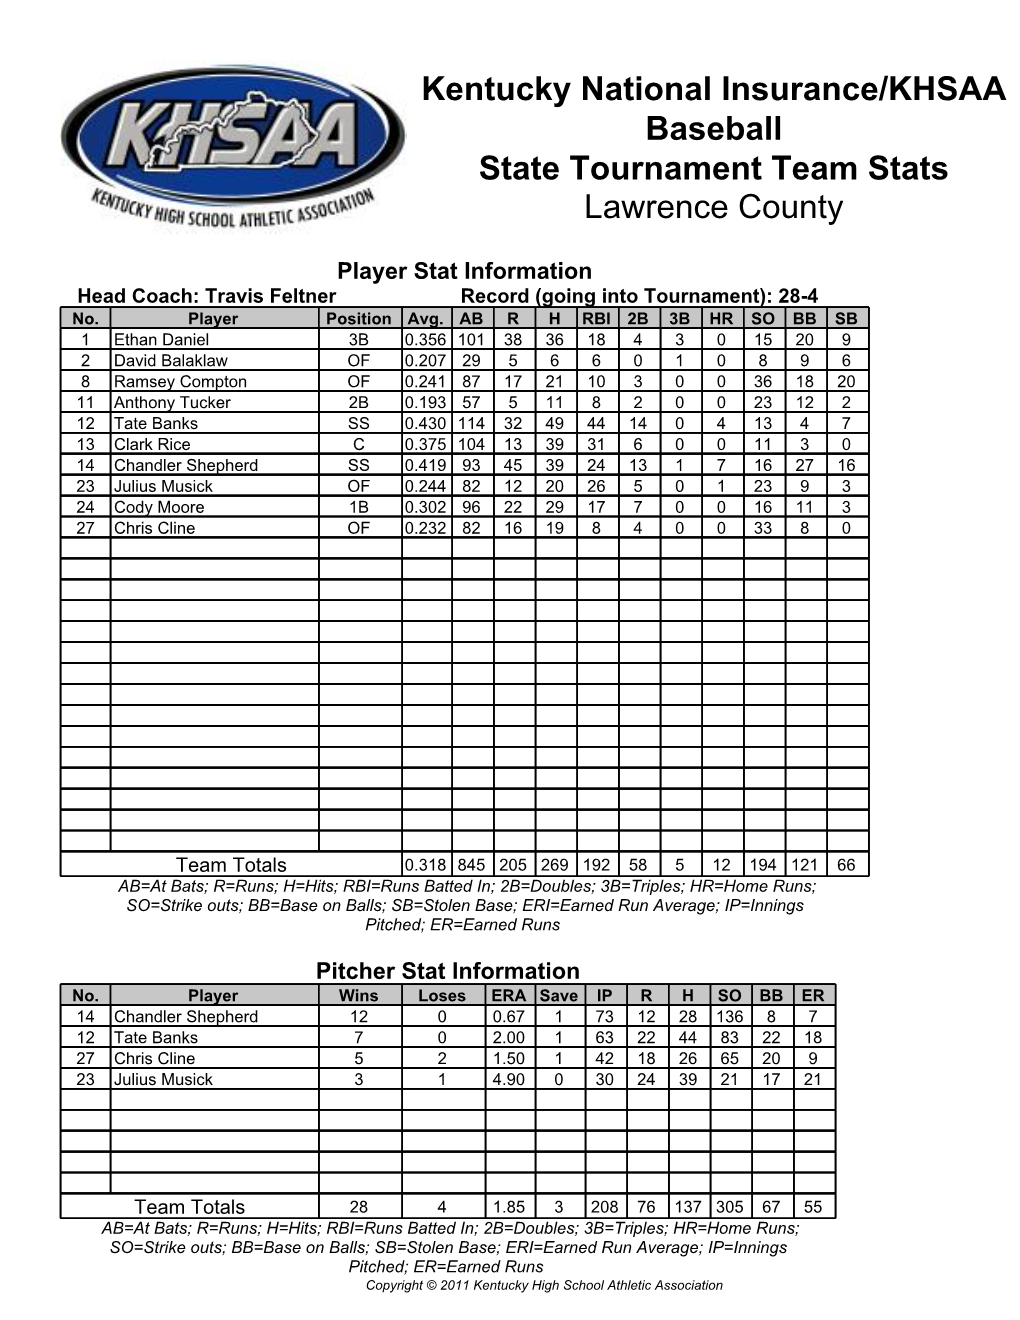 Kentucky National Insurance/KHSAA Baseball State Tournament Team Stats Lawrence County